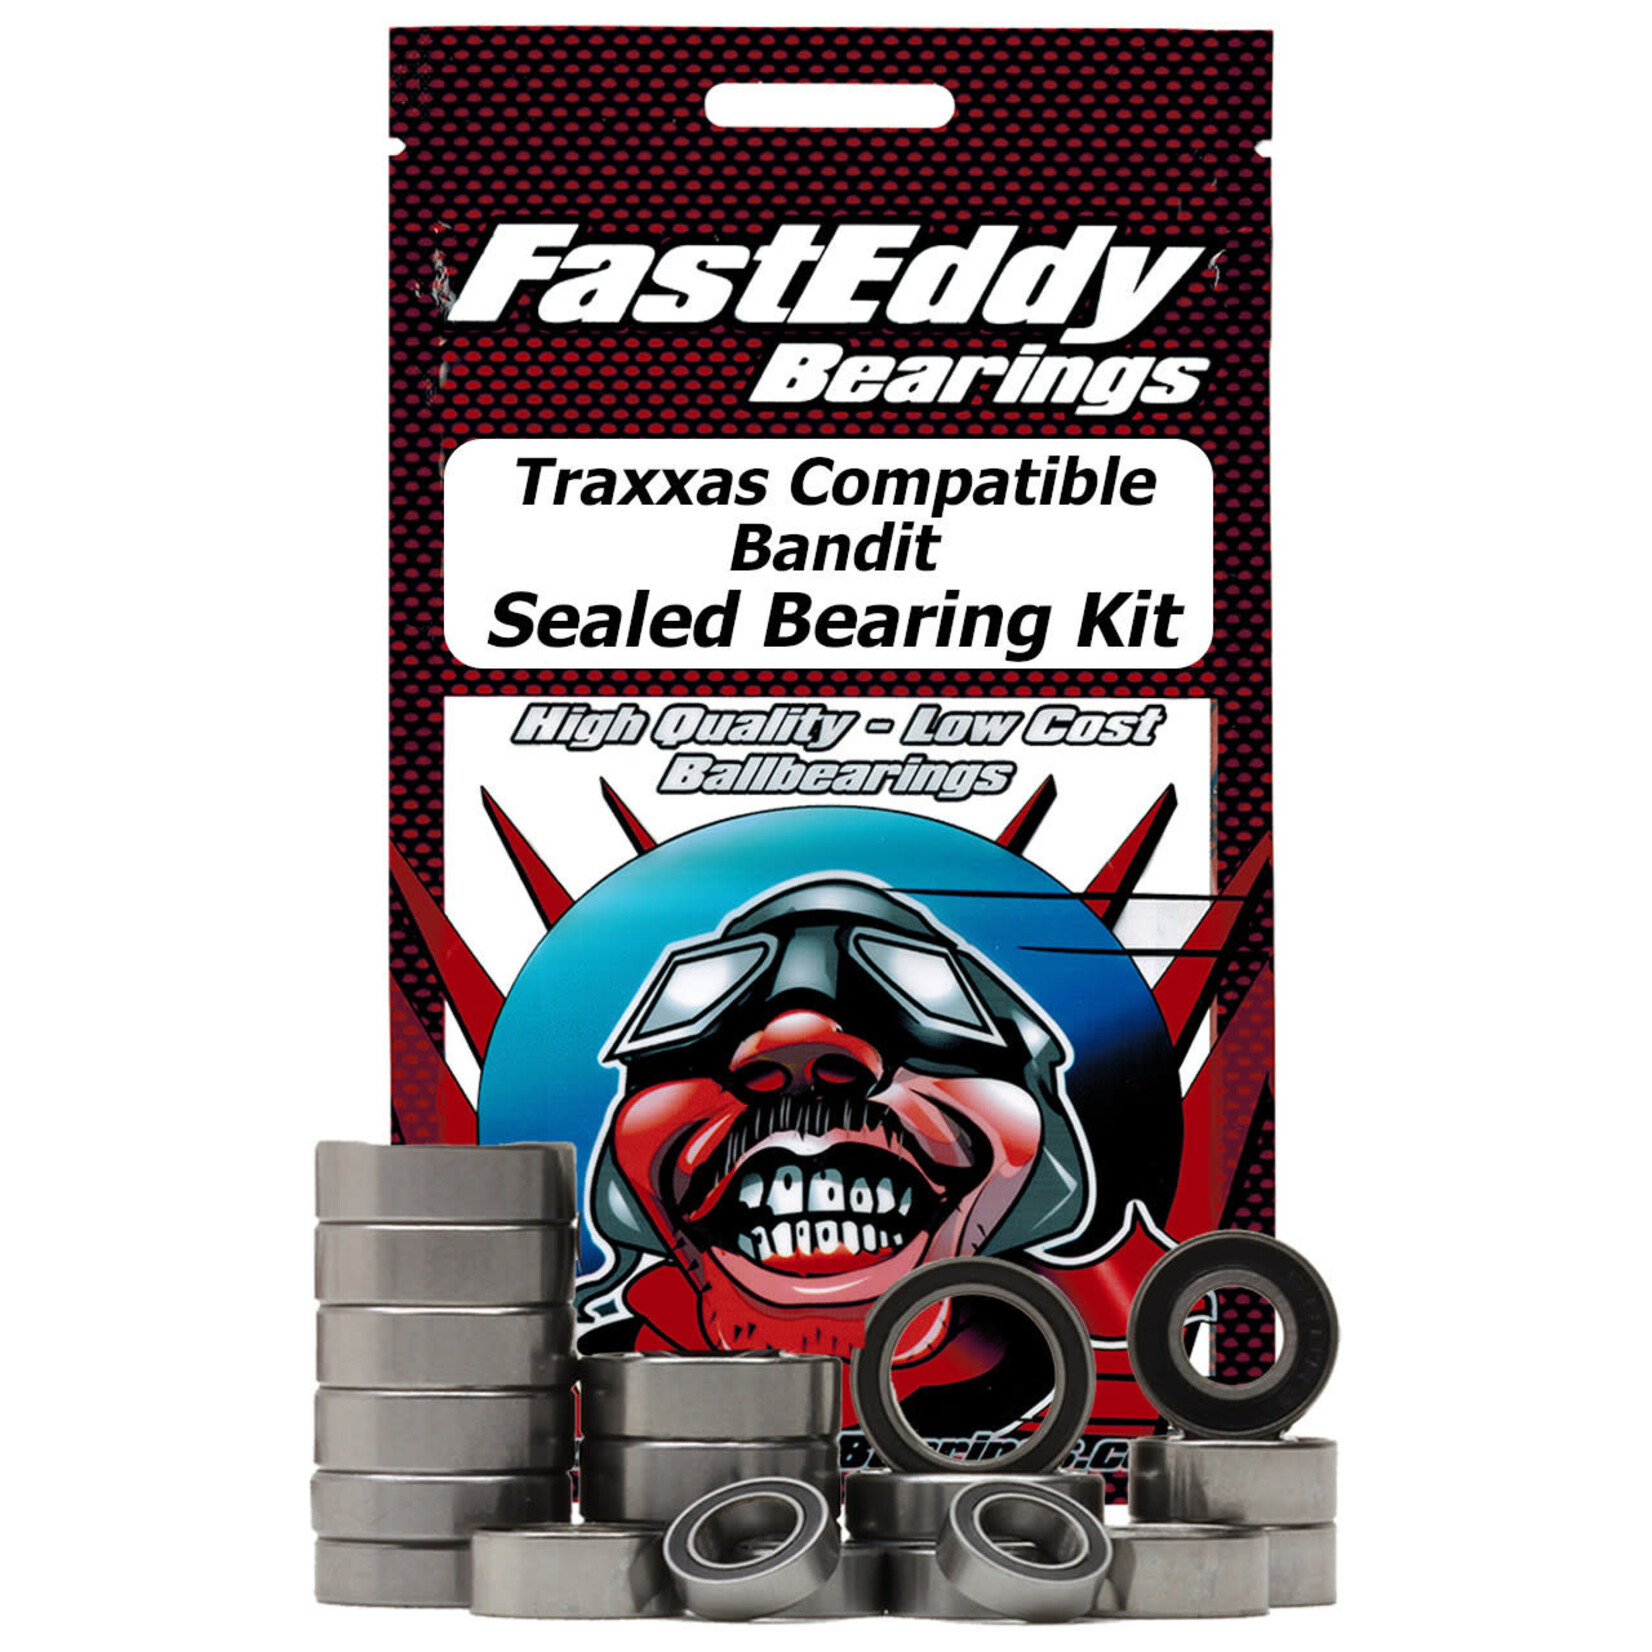 FastEddy FastEddy Bearings Traxxas Bandit Sealed Bearing Kit #TFE1169